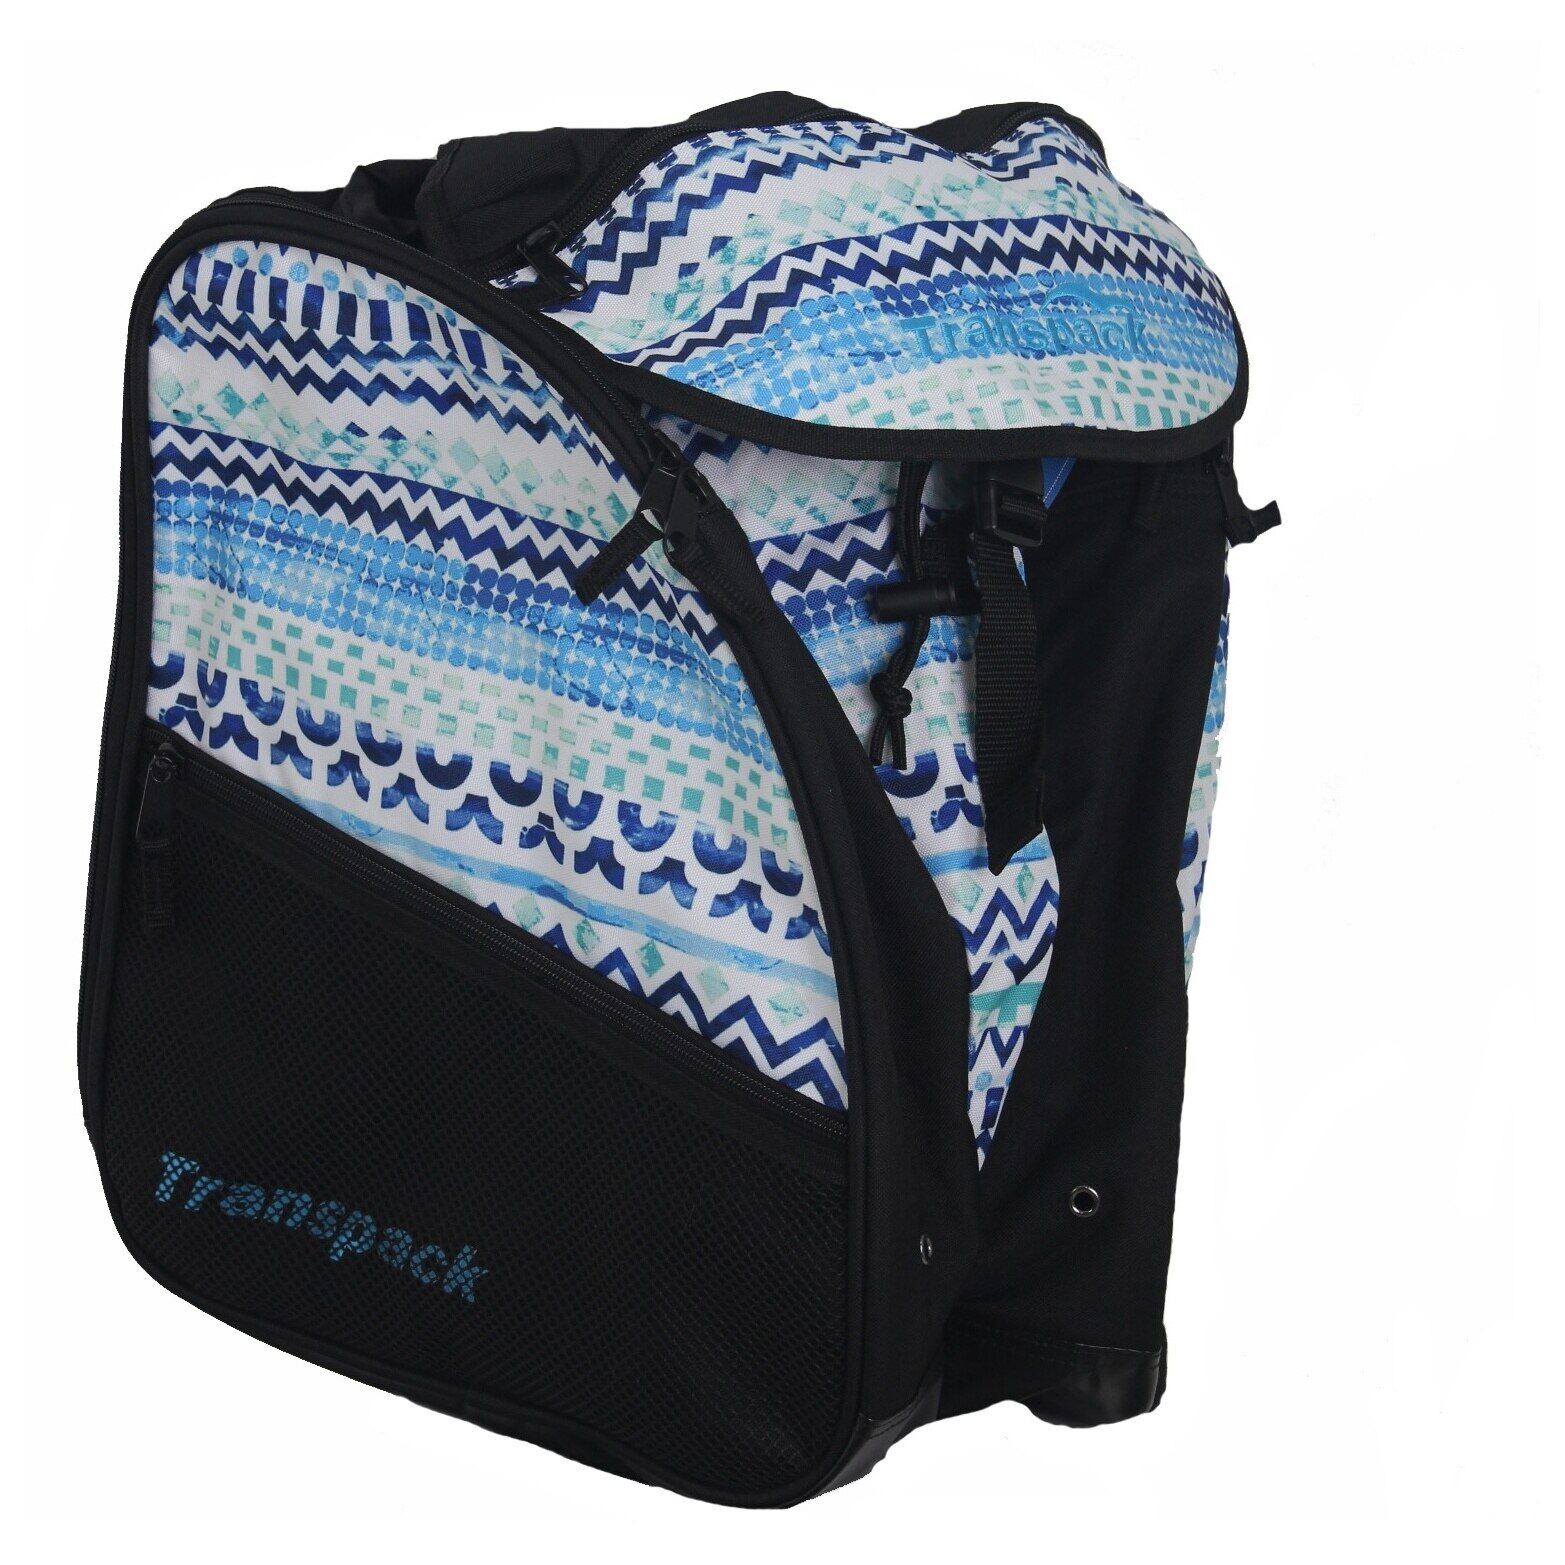 Transpack XTW Ski Boot Bag on Sale - Powder7.com